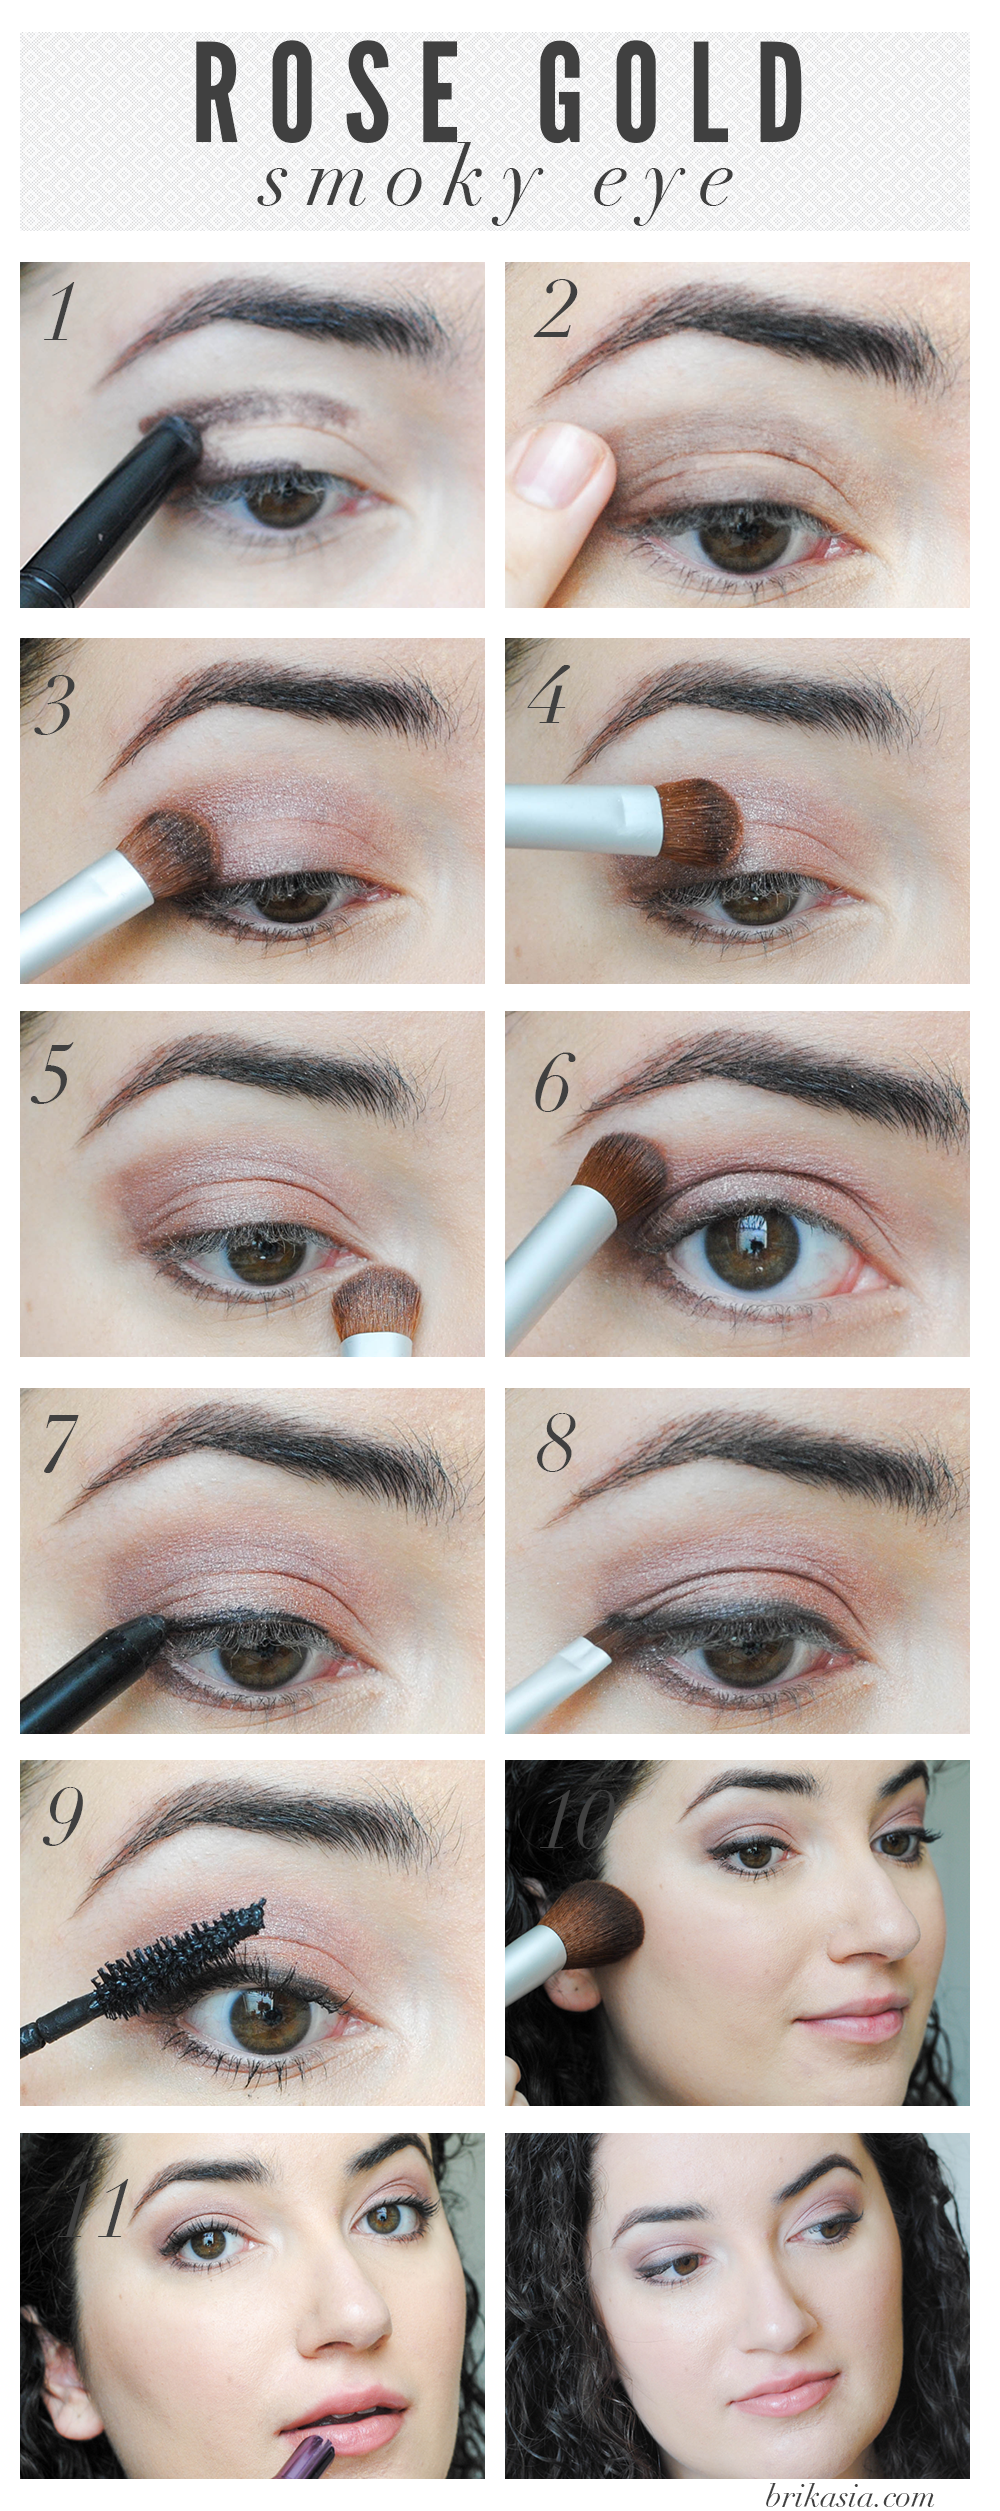 How to apply eye makeup tutorial rose